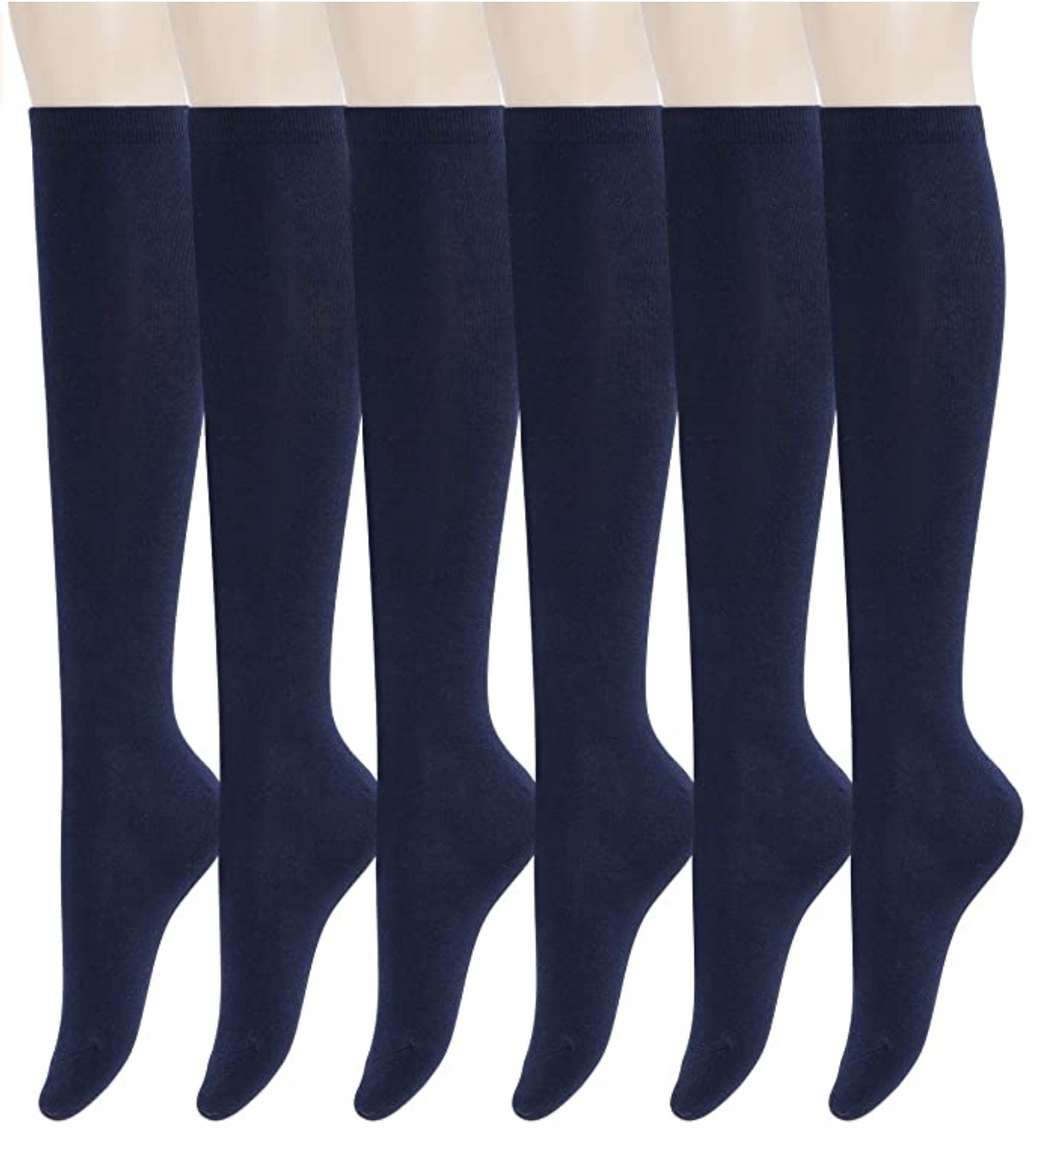 YEJIMONG Women's School Uniform / Team Sports / Tube Knee High Socks - Navy (6 Pairs / Size 5-9 / Cotton)